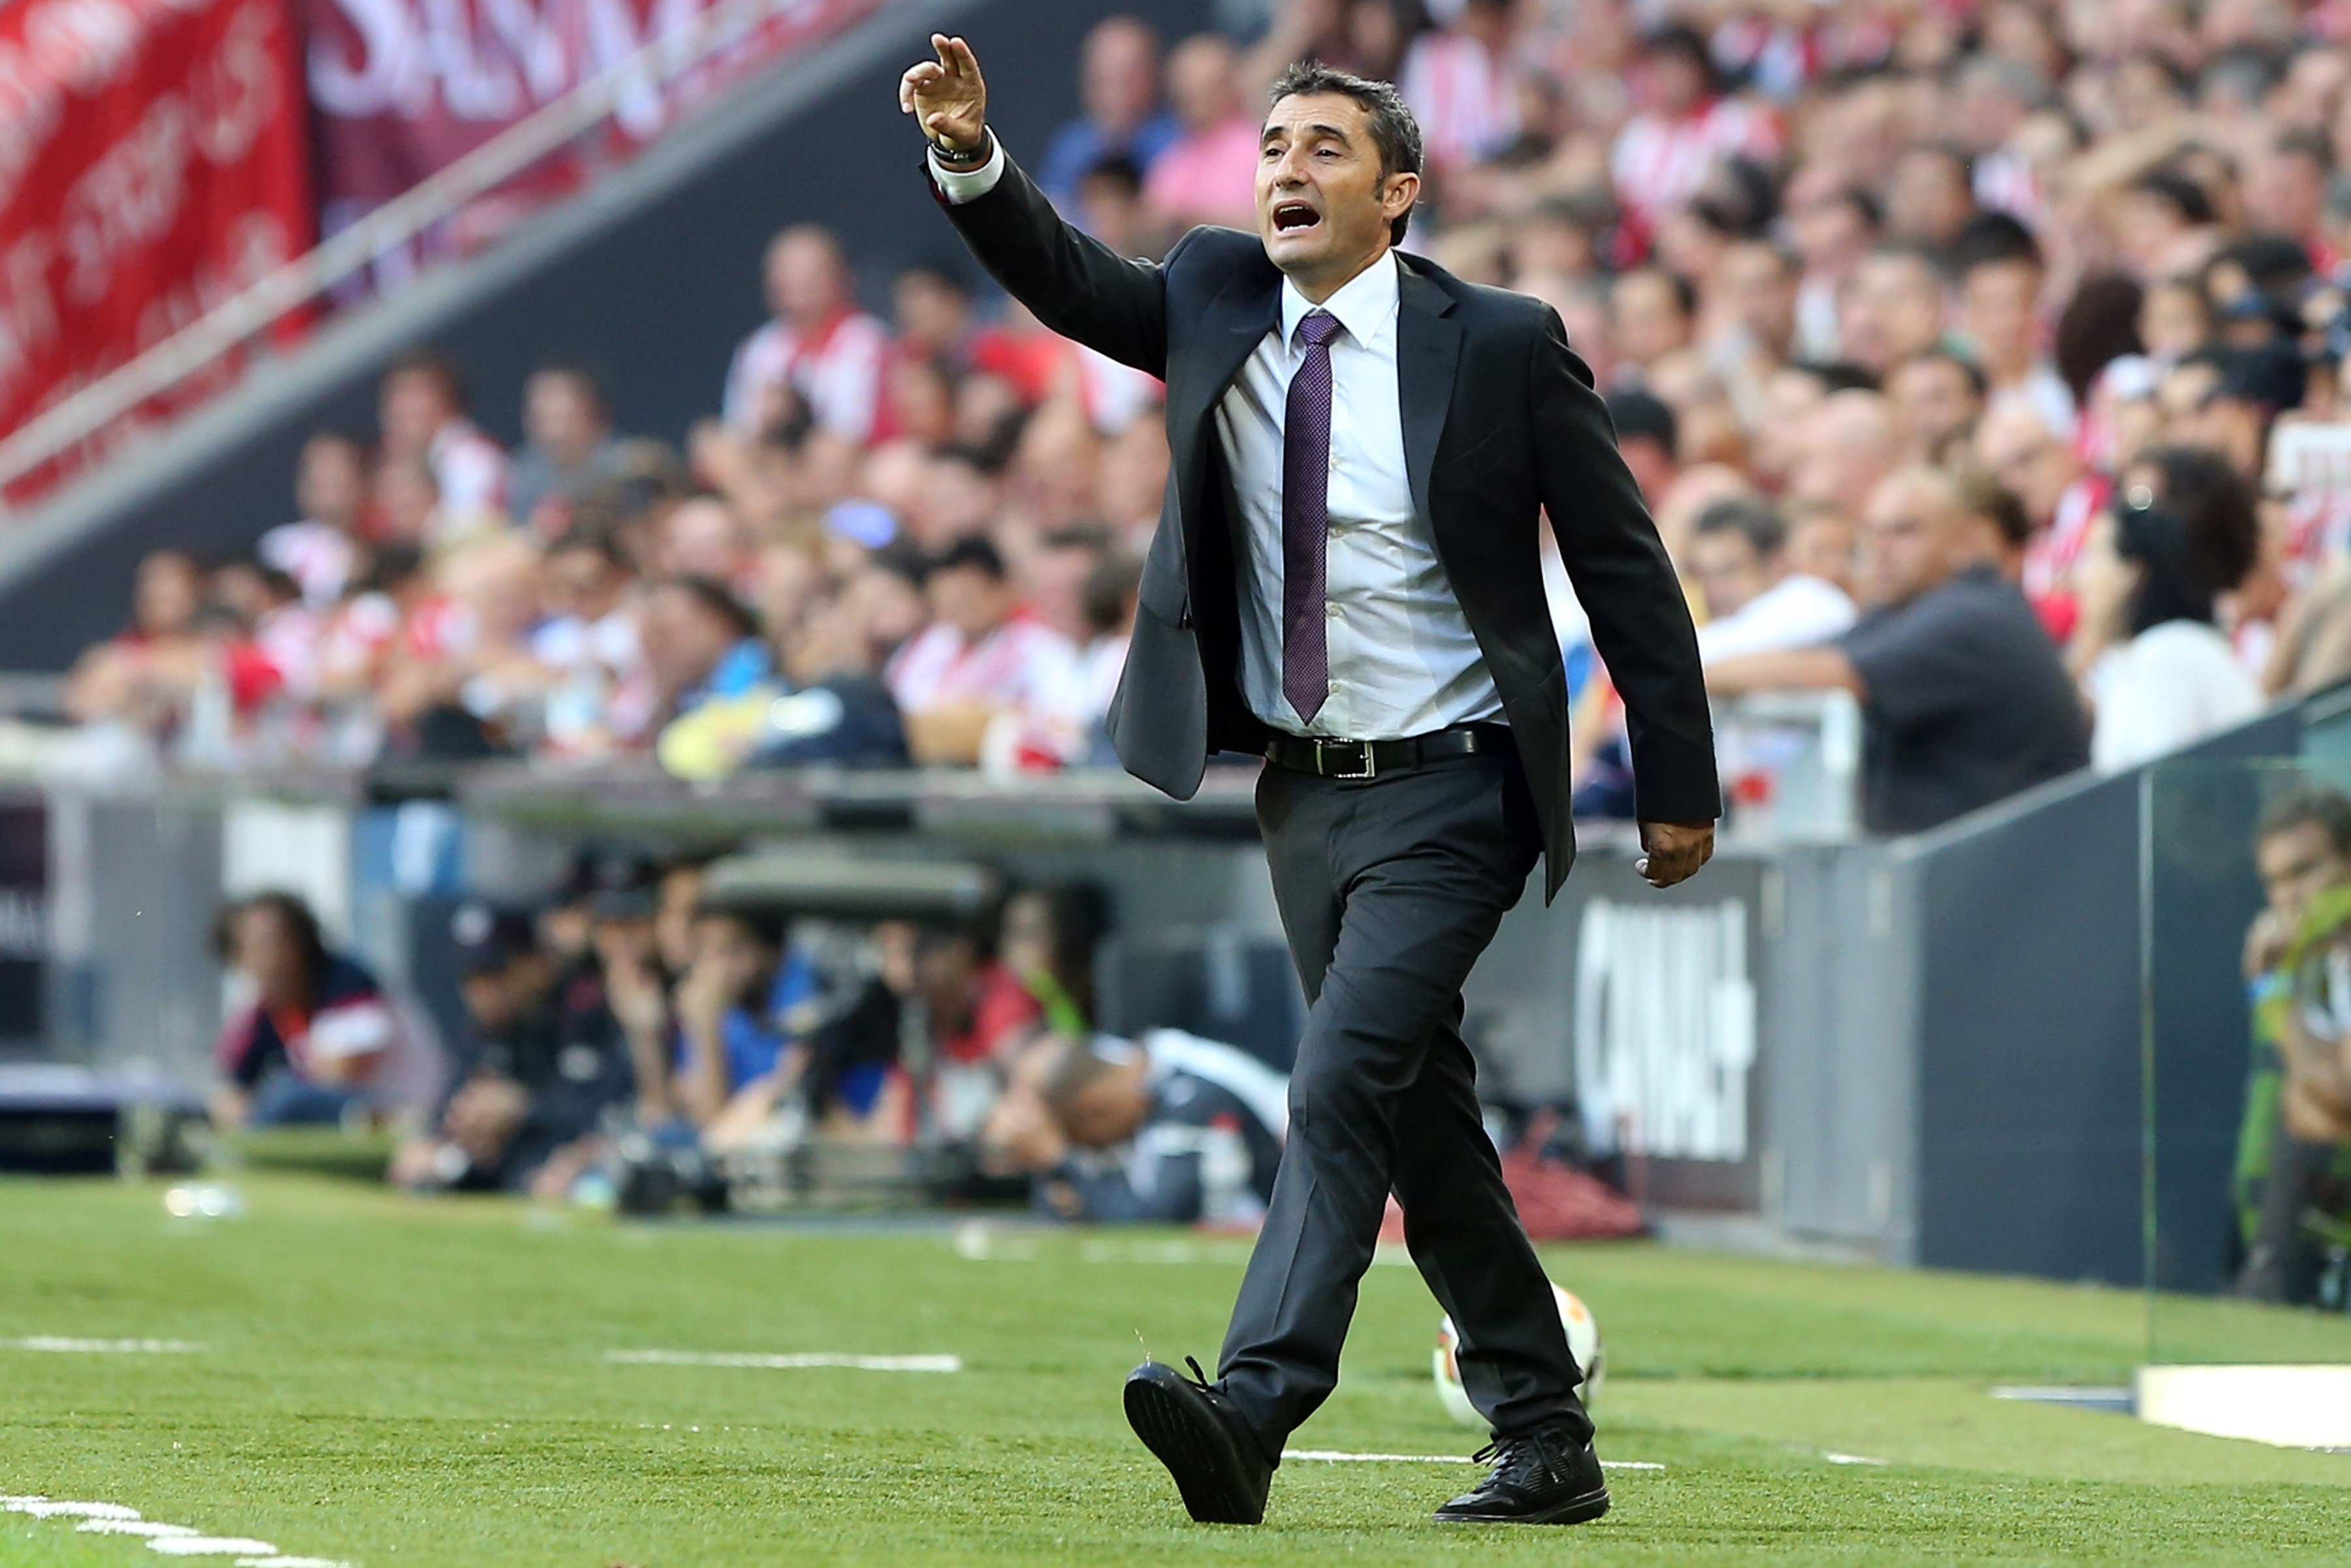 Enriquea bi na klupi Barcelone mogao naslijediti trener Athletic Bilbaoa Ernesto Valverde